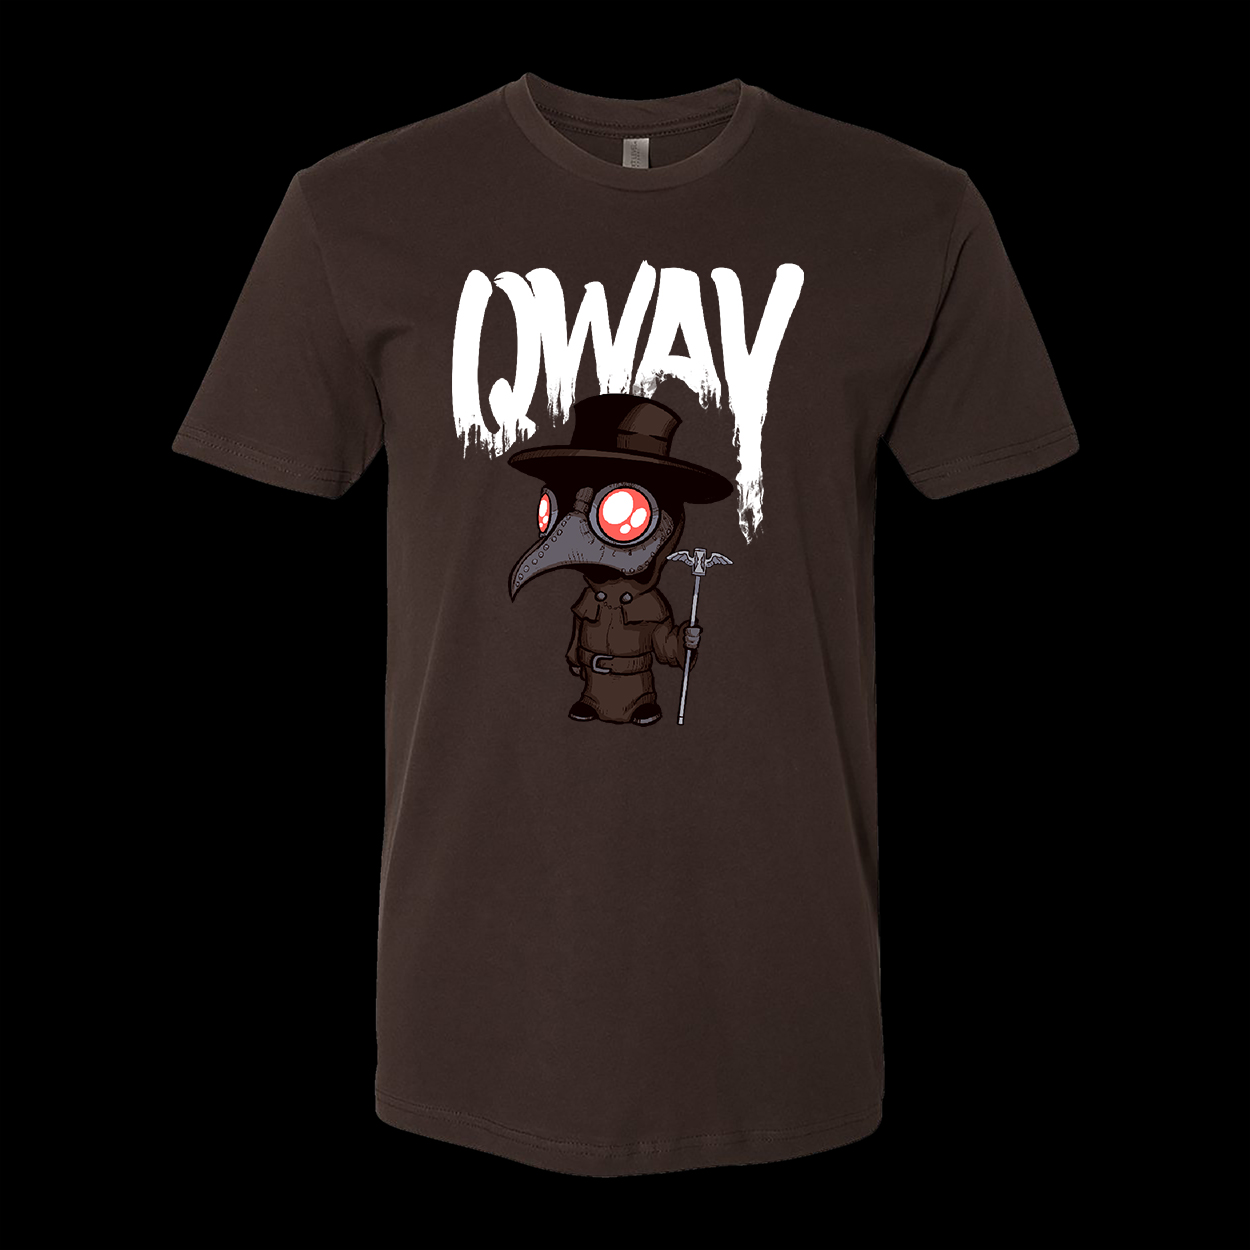 Qway Plague Doctor t-shirt Dark Chocolate color